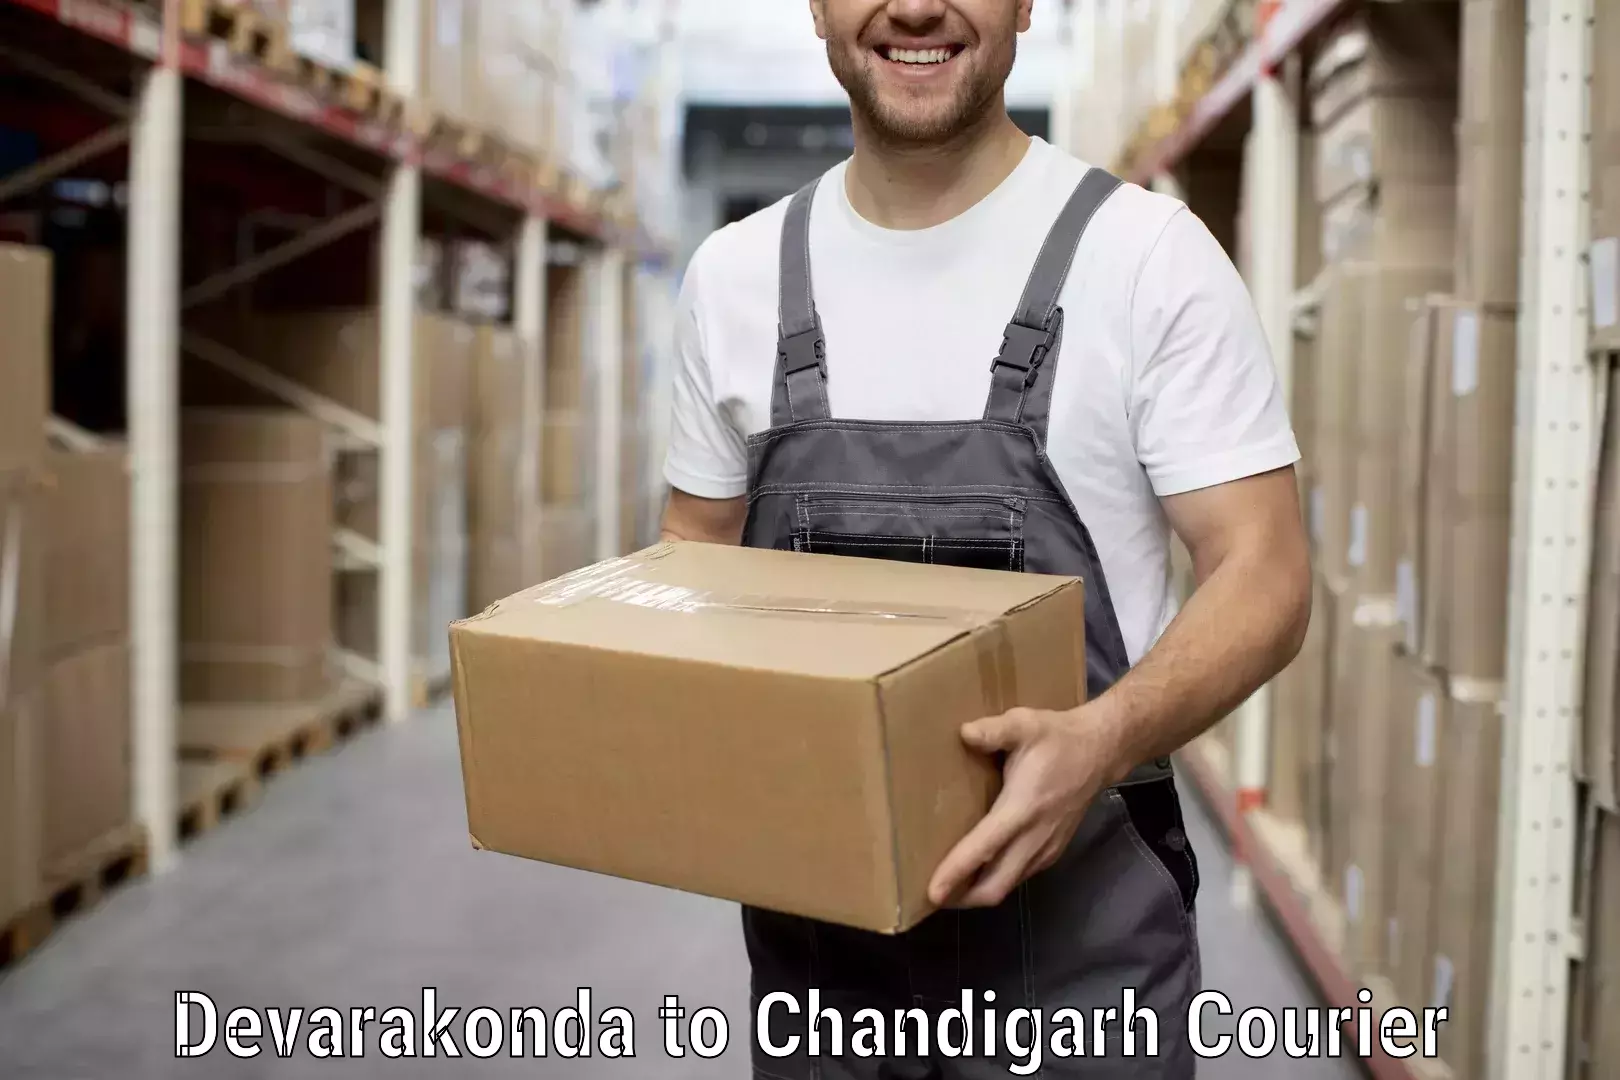 Furniture transport company Devarakonda to Chandigarh